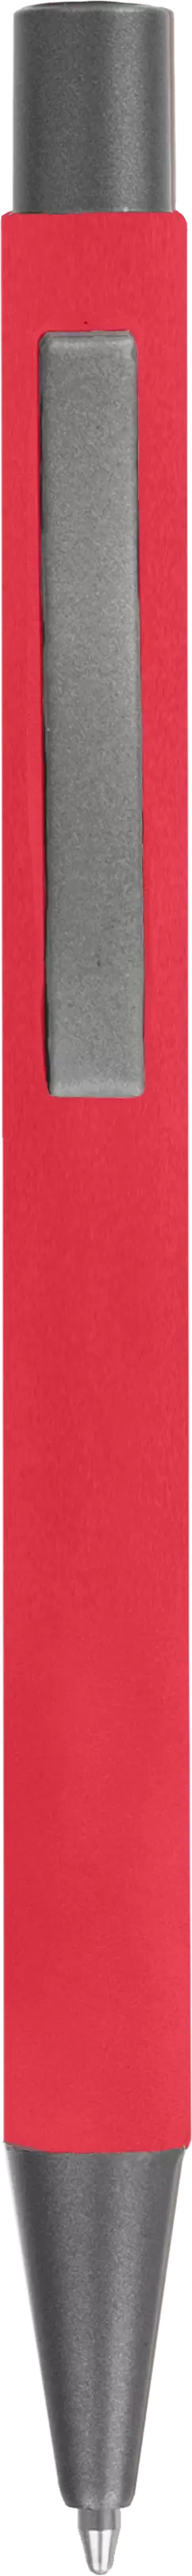 Ручка MAX SOFT TITAN Красная 1110-03